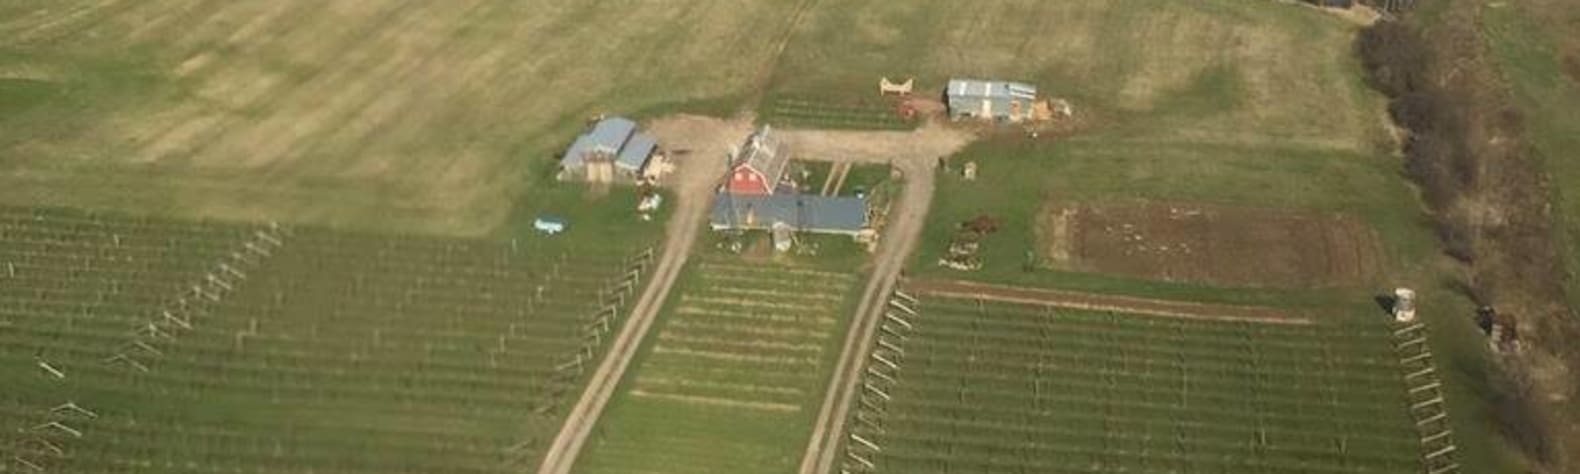 Vineyard Farm & Family Camp